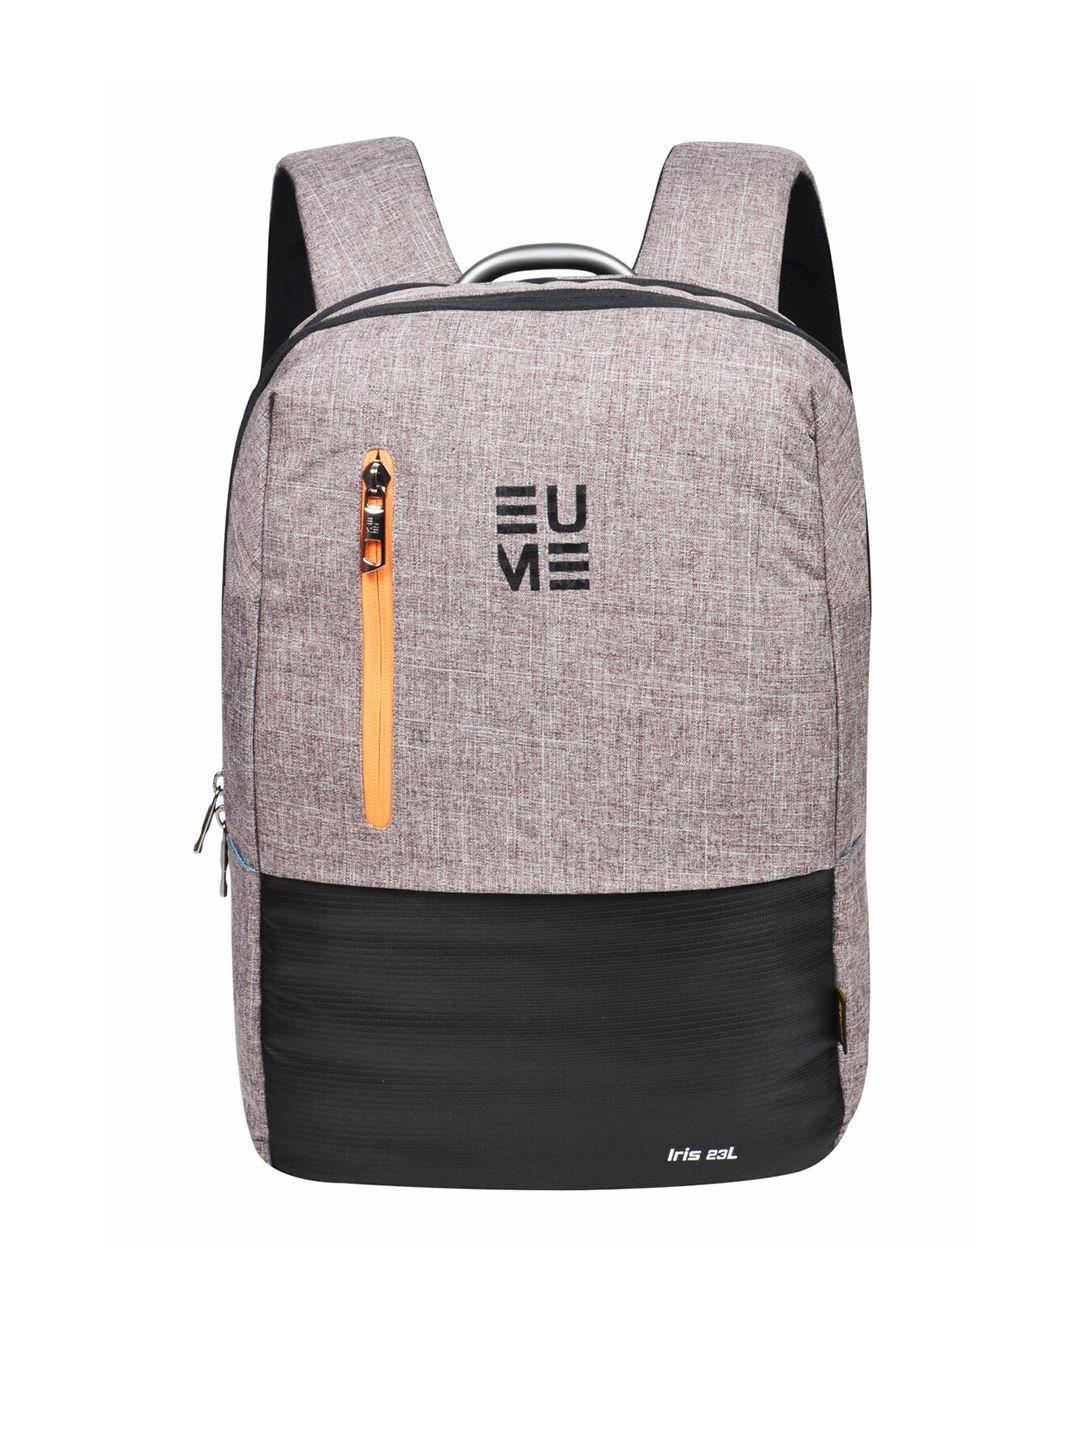 eume unisex brown& black colourblocked backpack